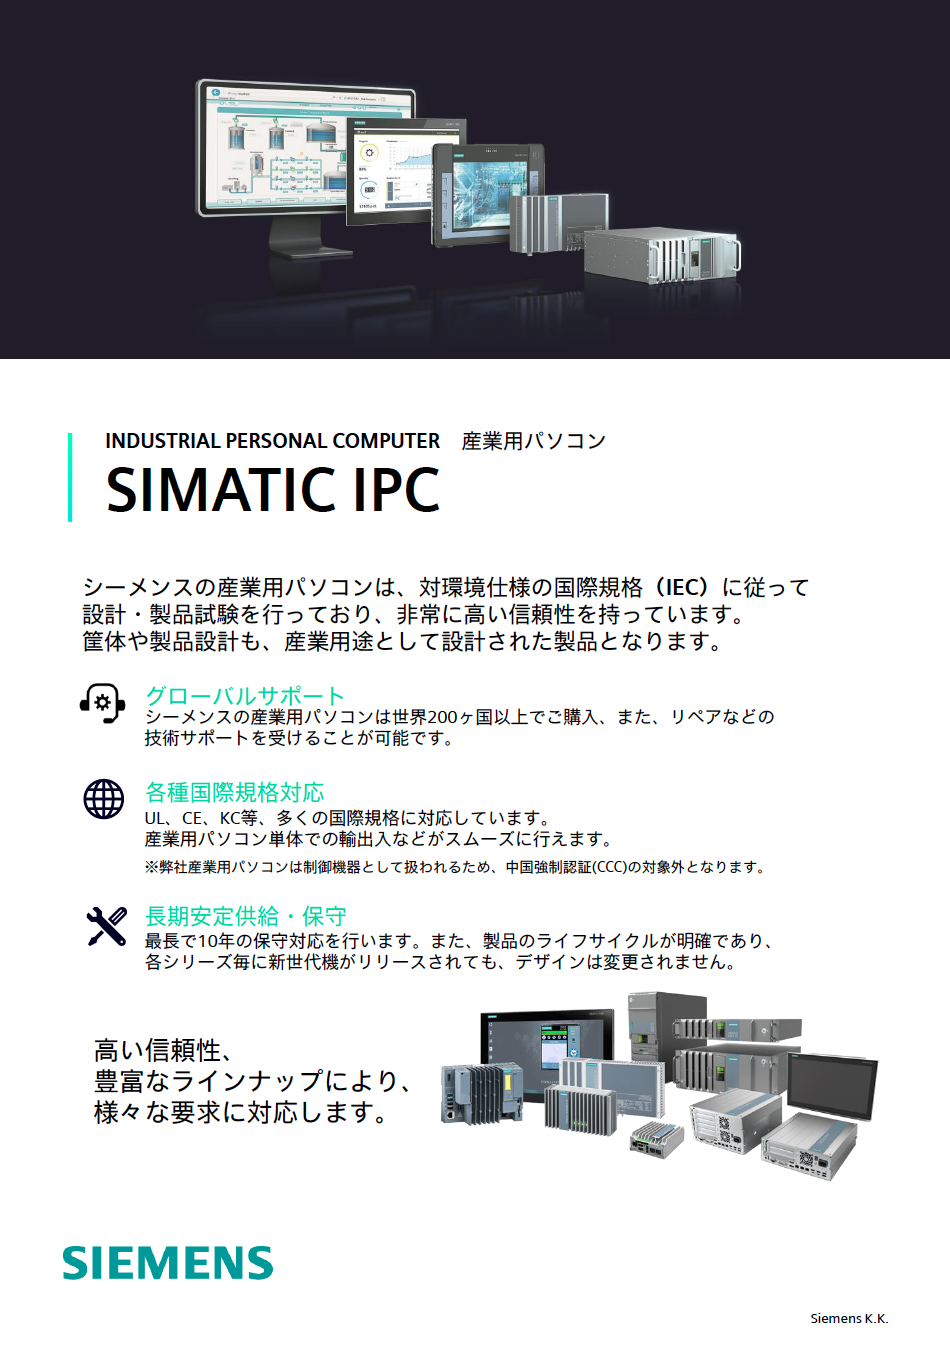 SIMATIC IPC 資料